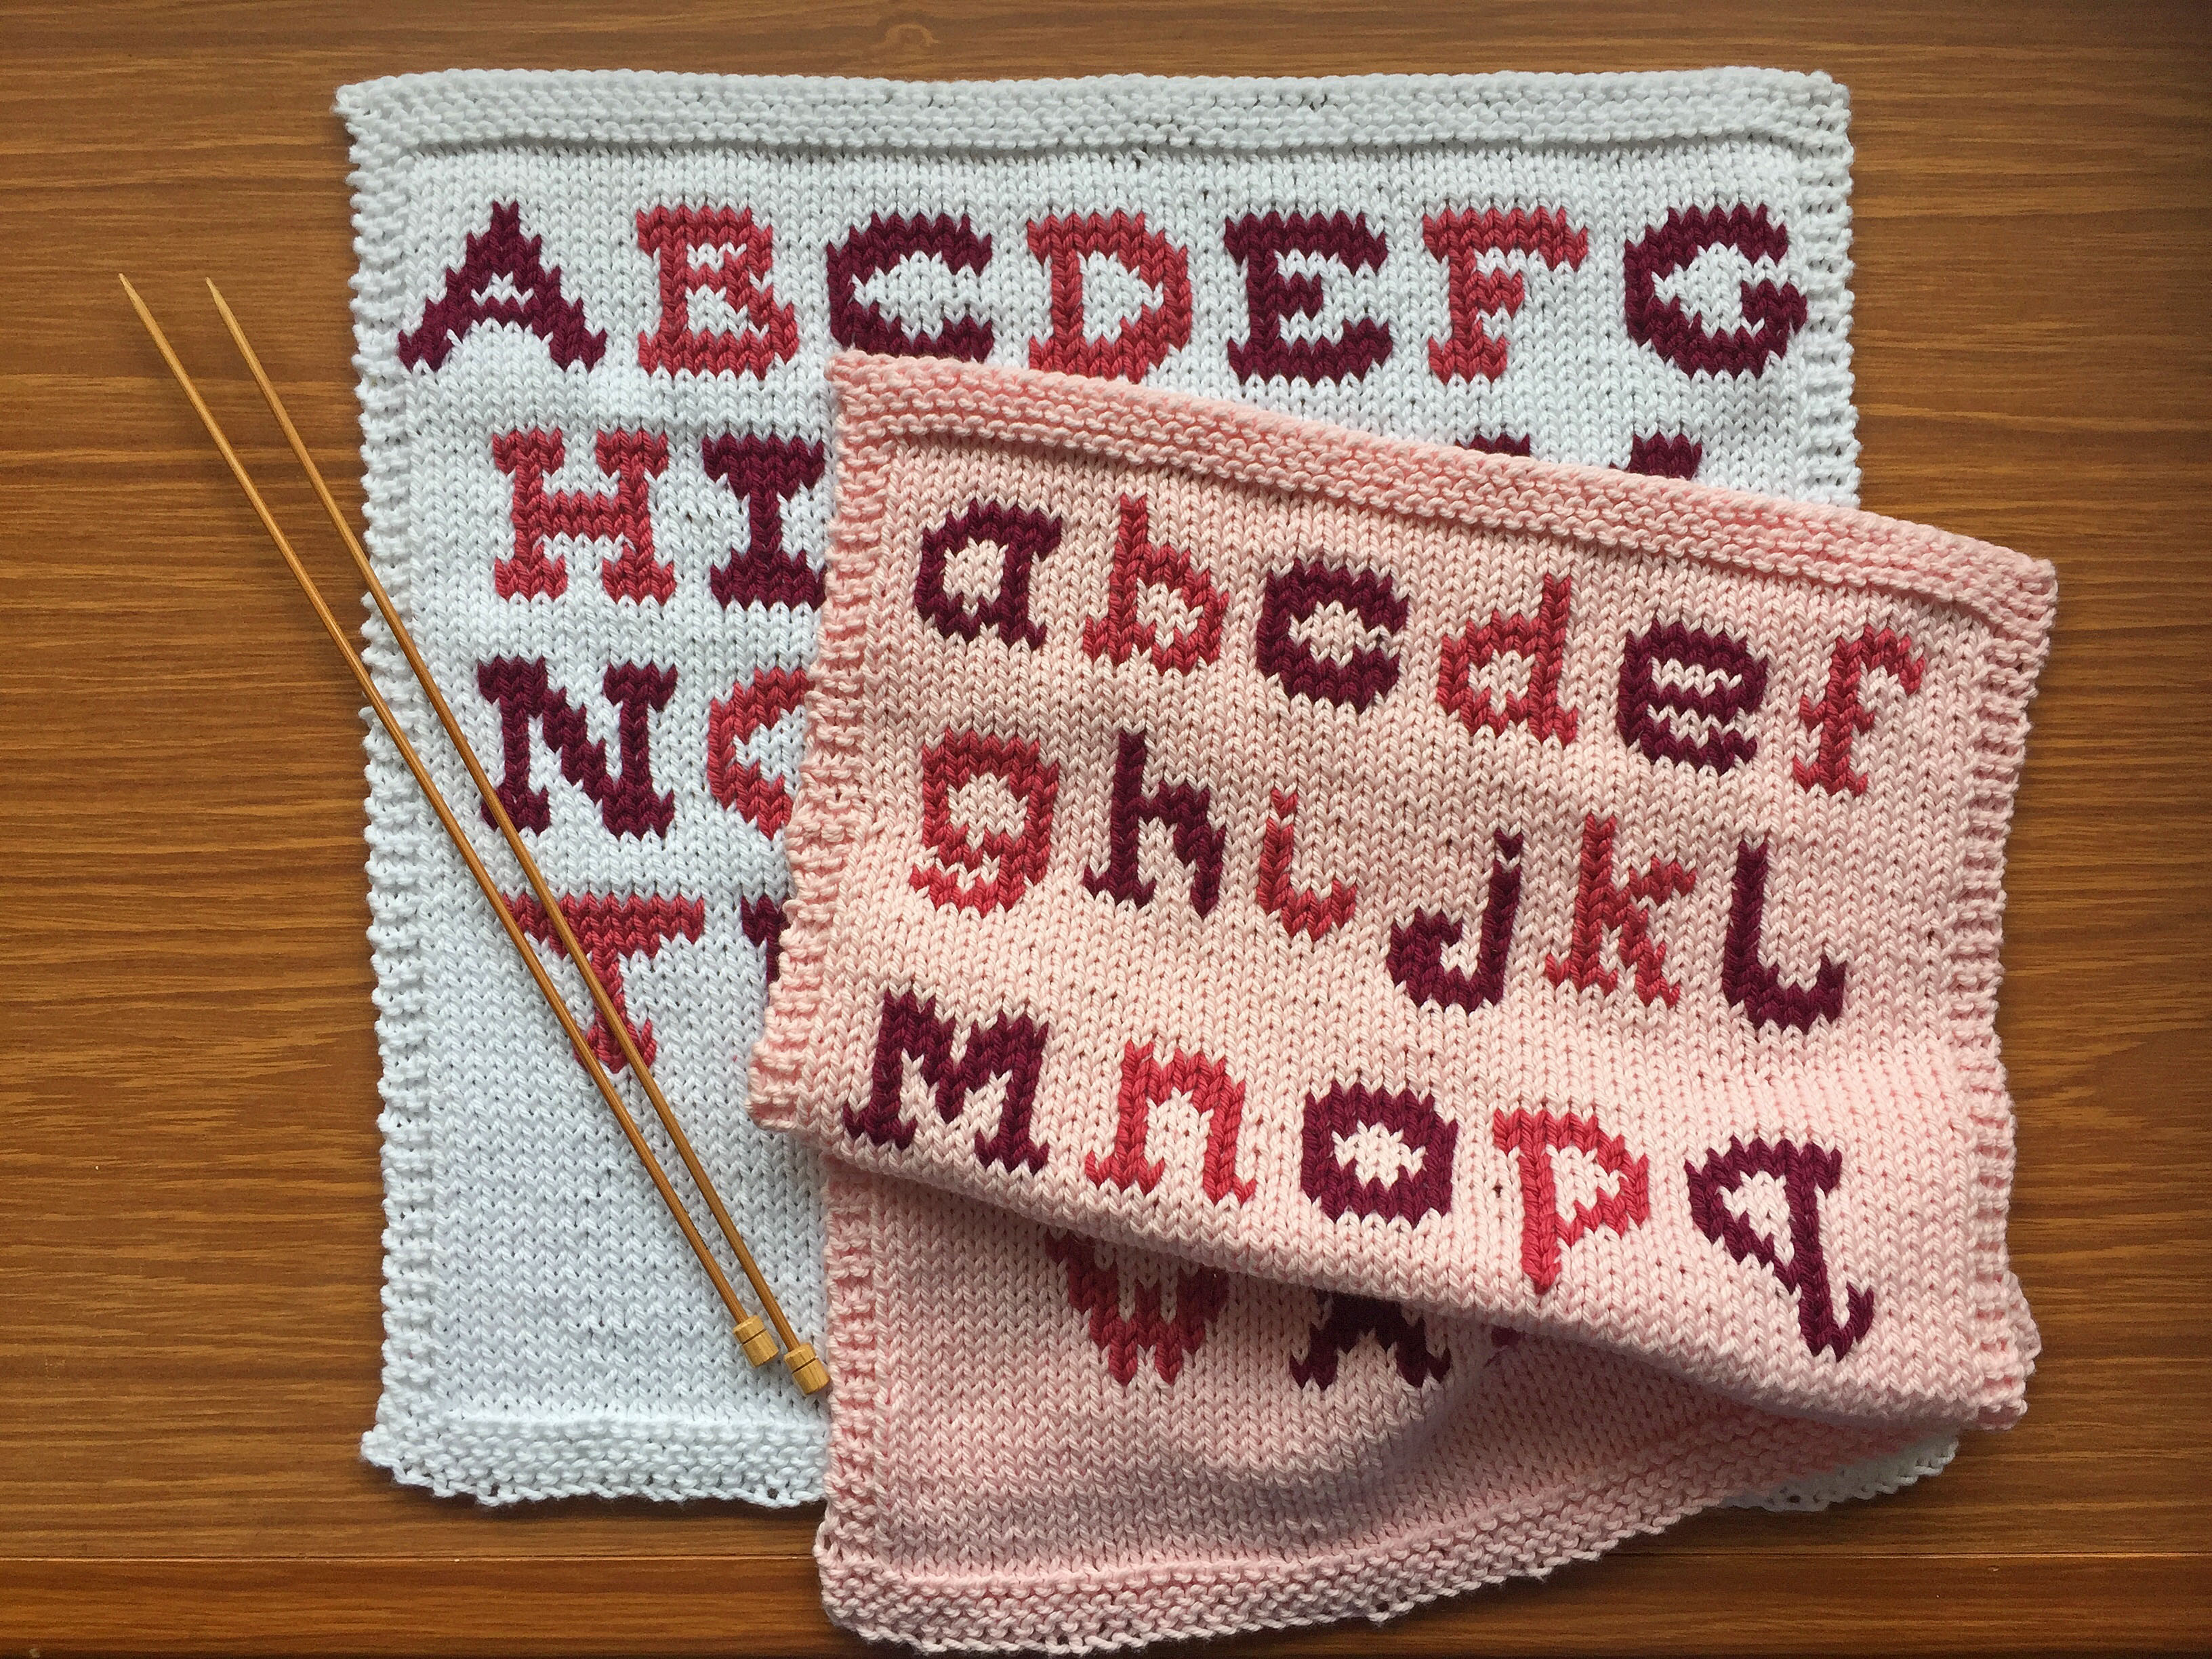 Knitting Alphabet Chart